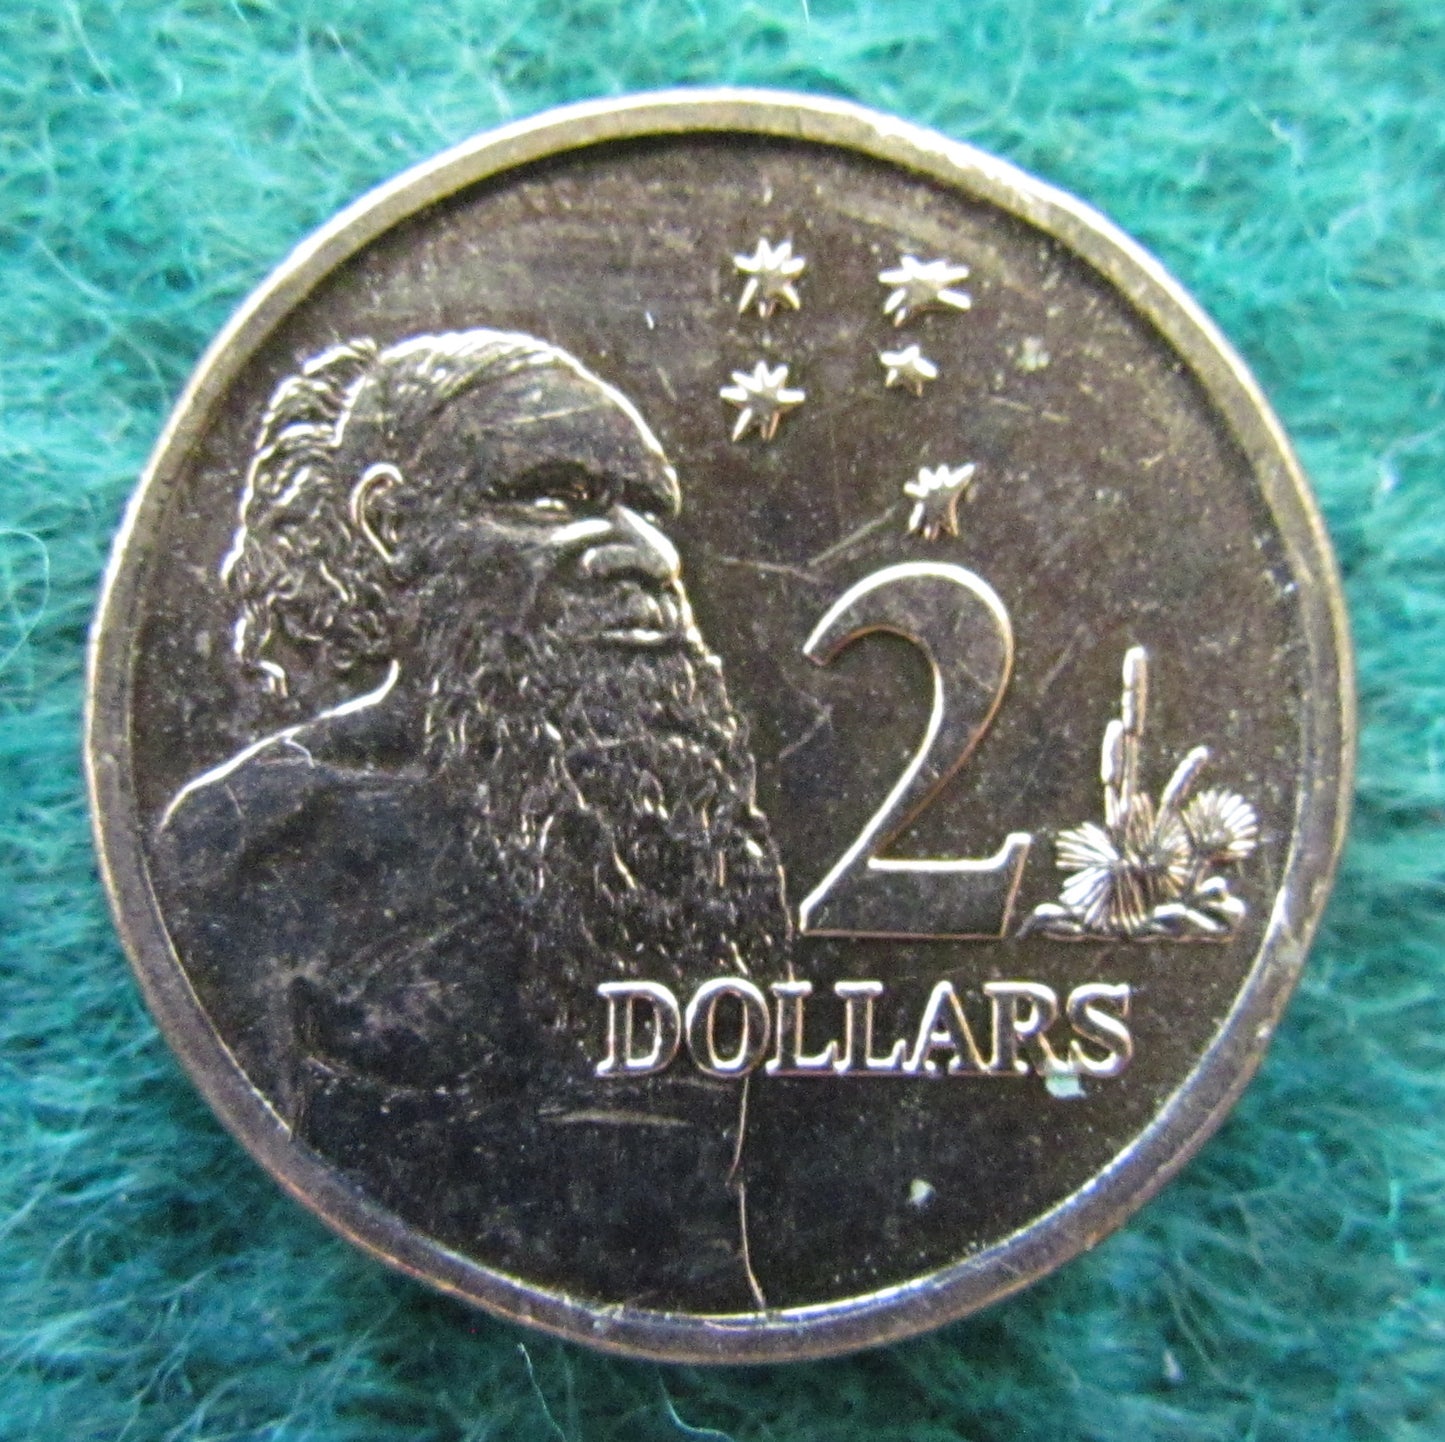 Australian 1999 2 Dollar Aboriginal Elder Queen Elizabeth Coin - Circulated